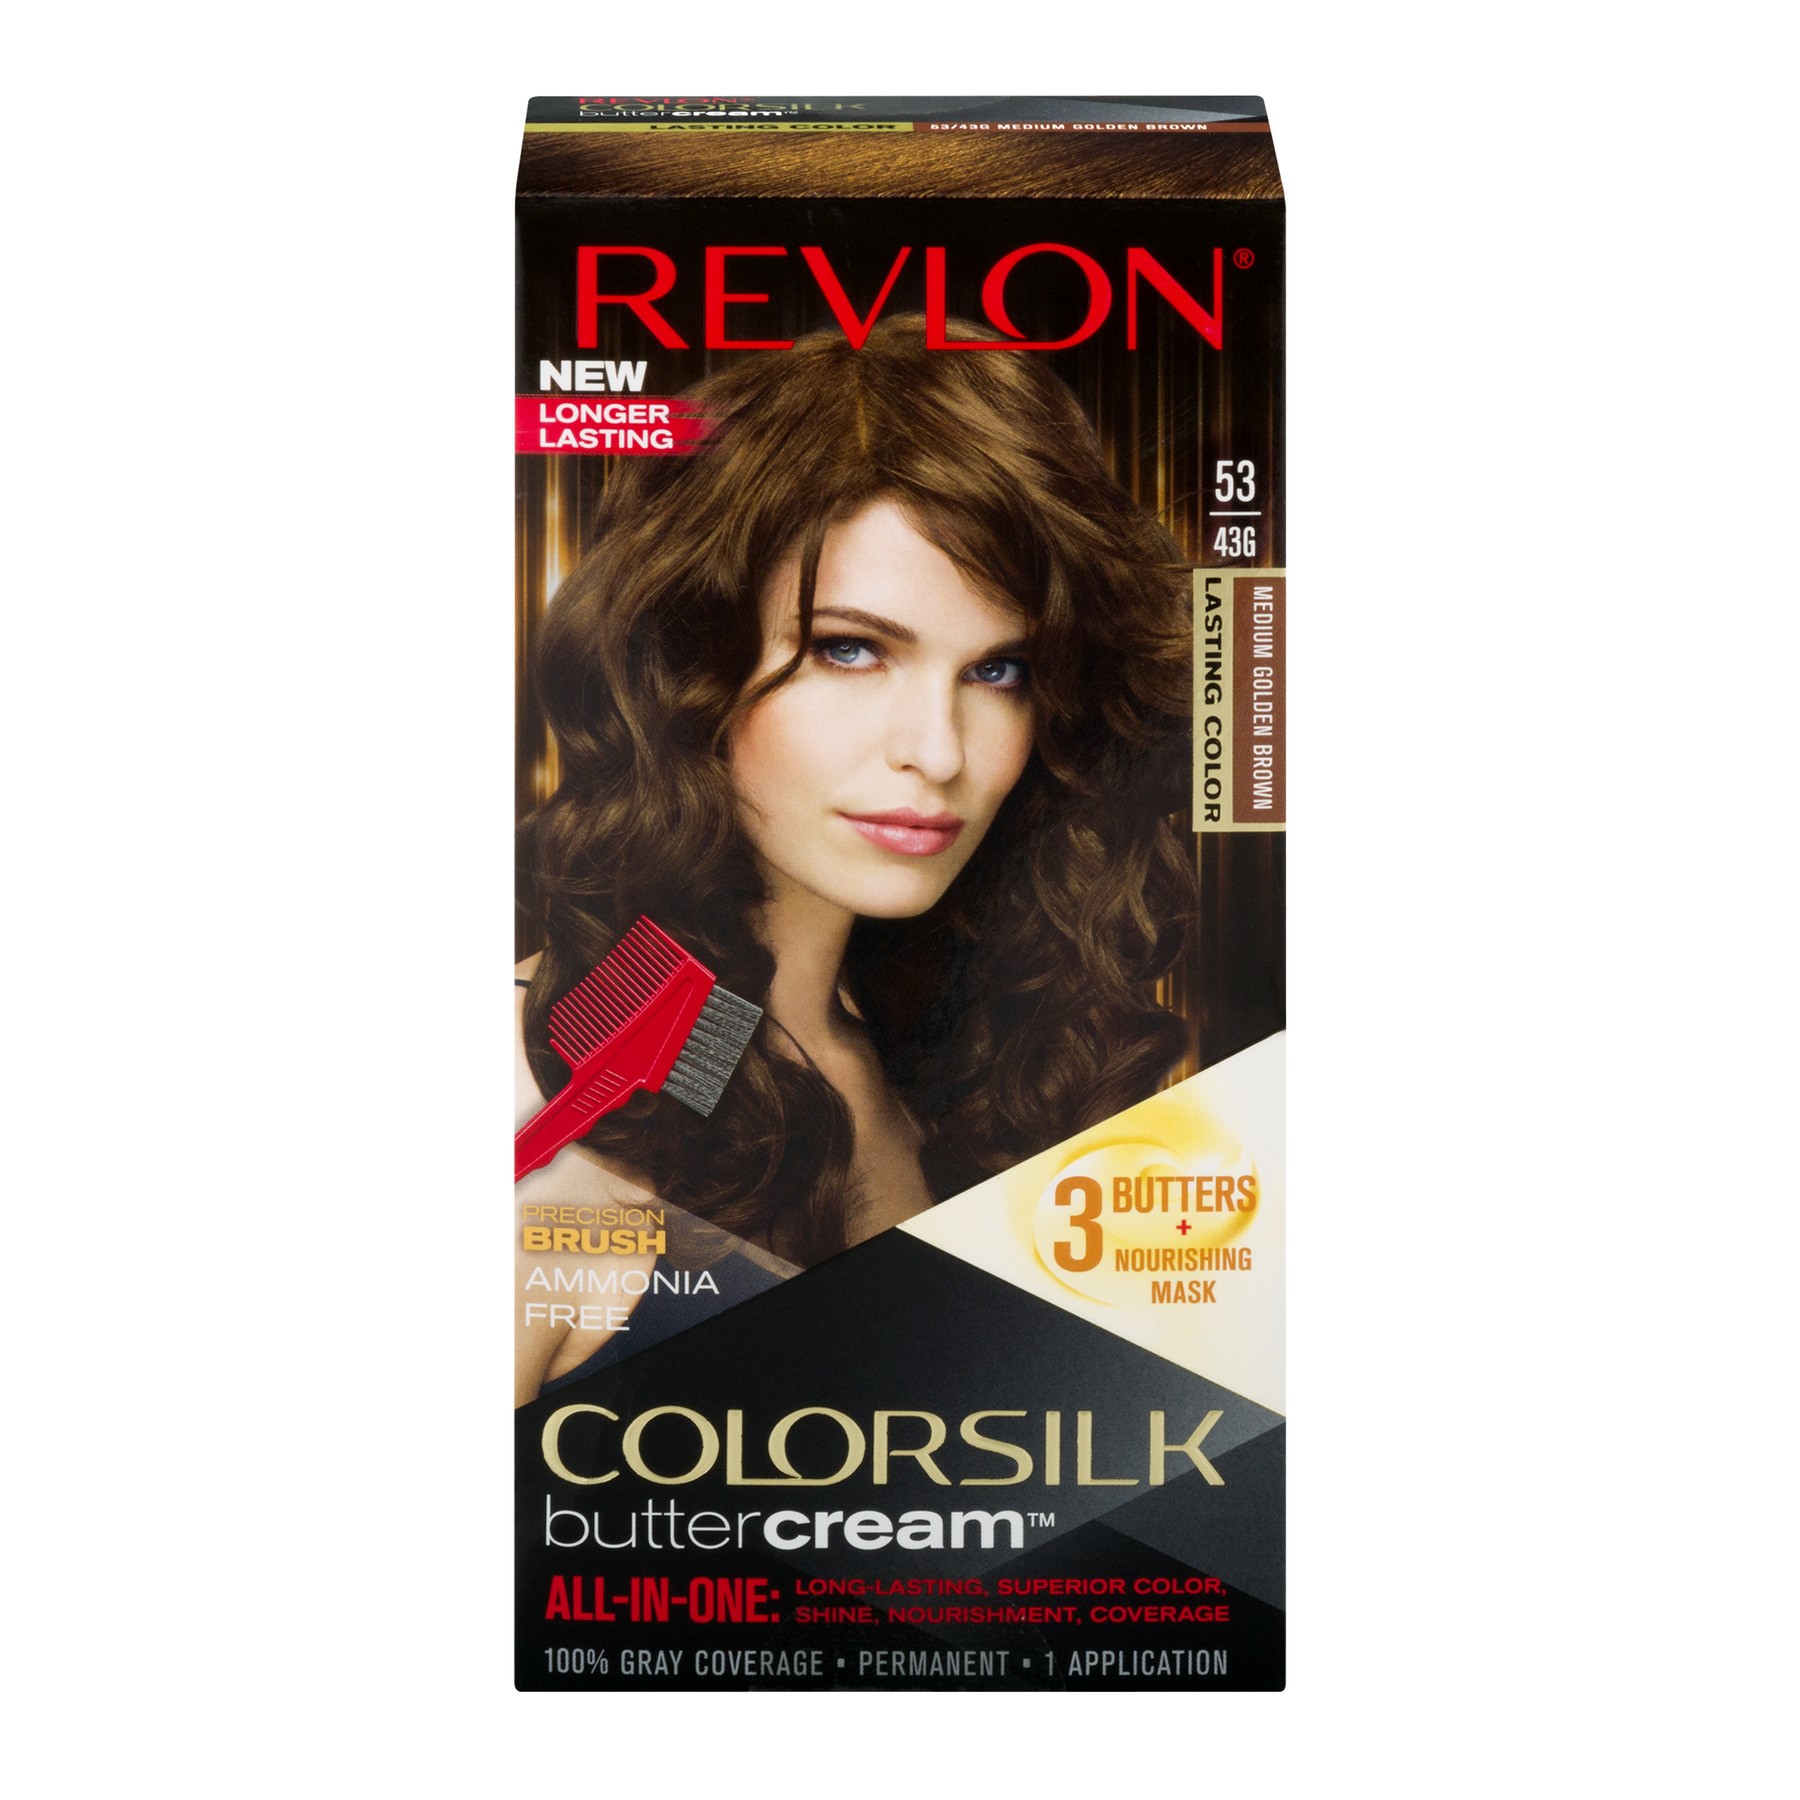 Revlon ColorSilk Buttercream™ Hair Color - Medium Golden Brown - image 1 of 2